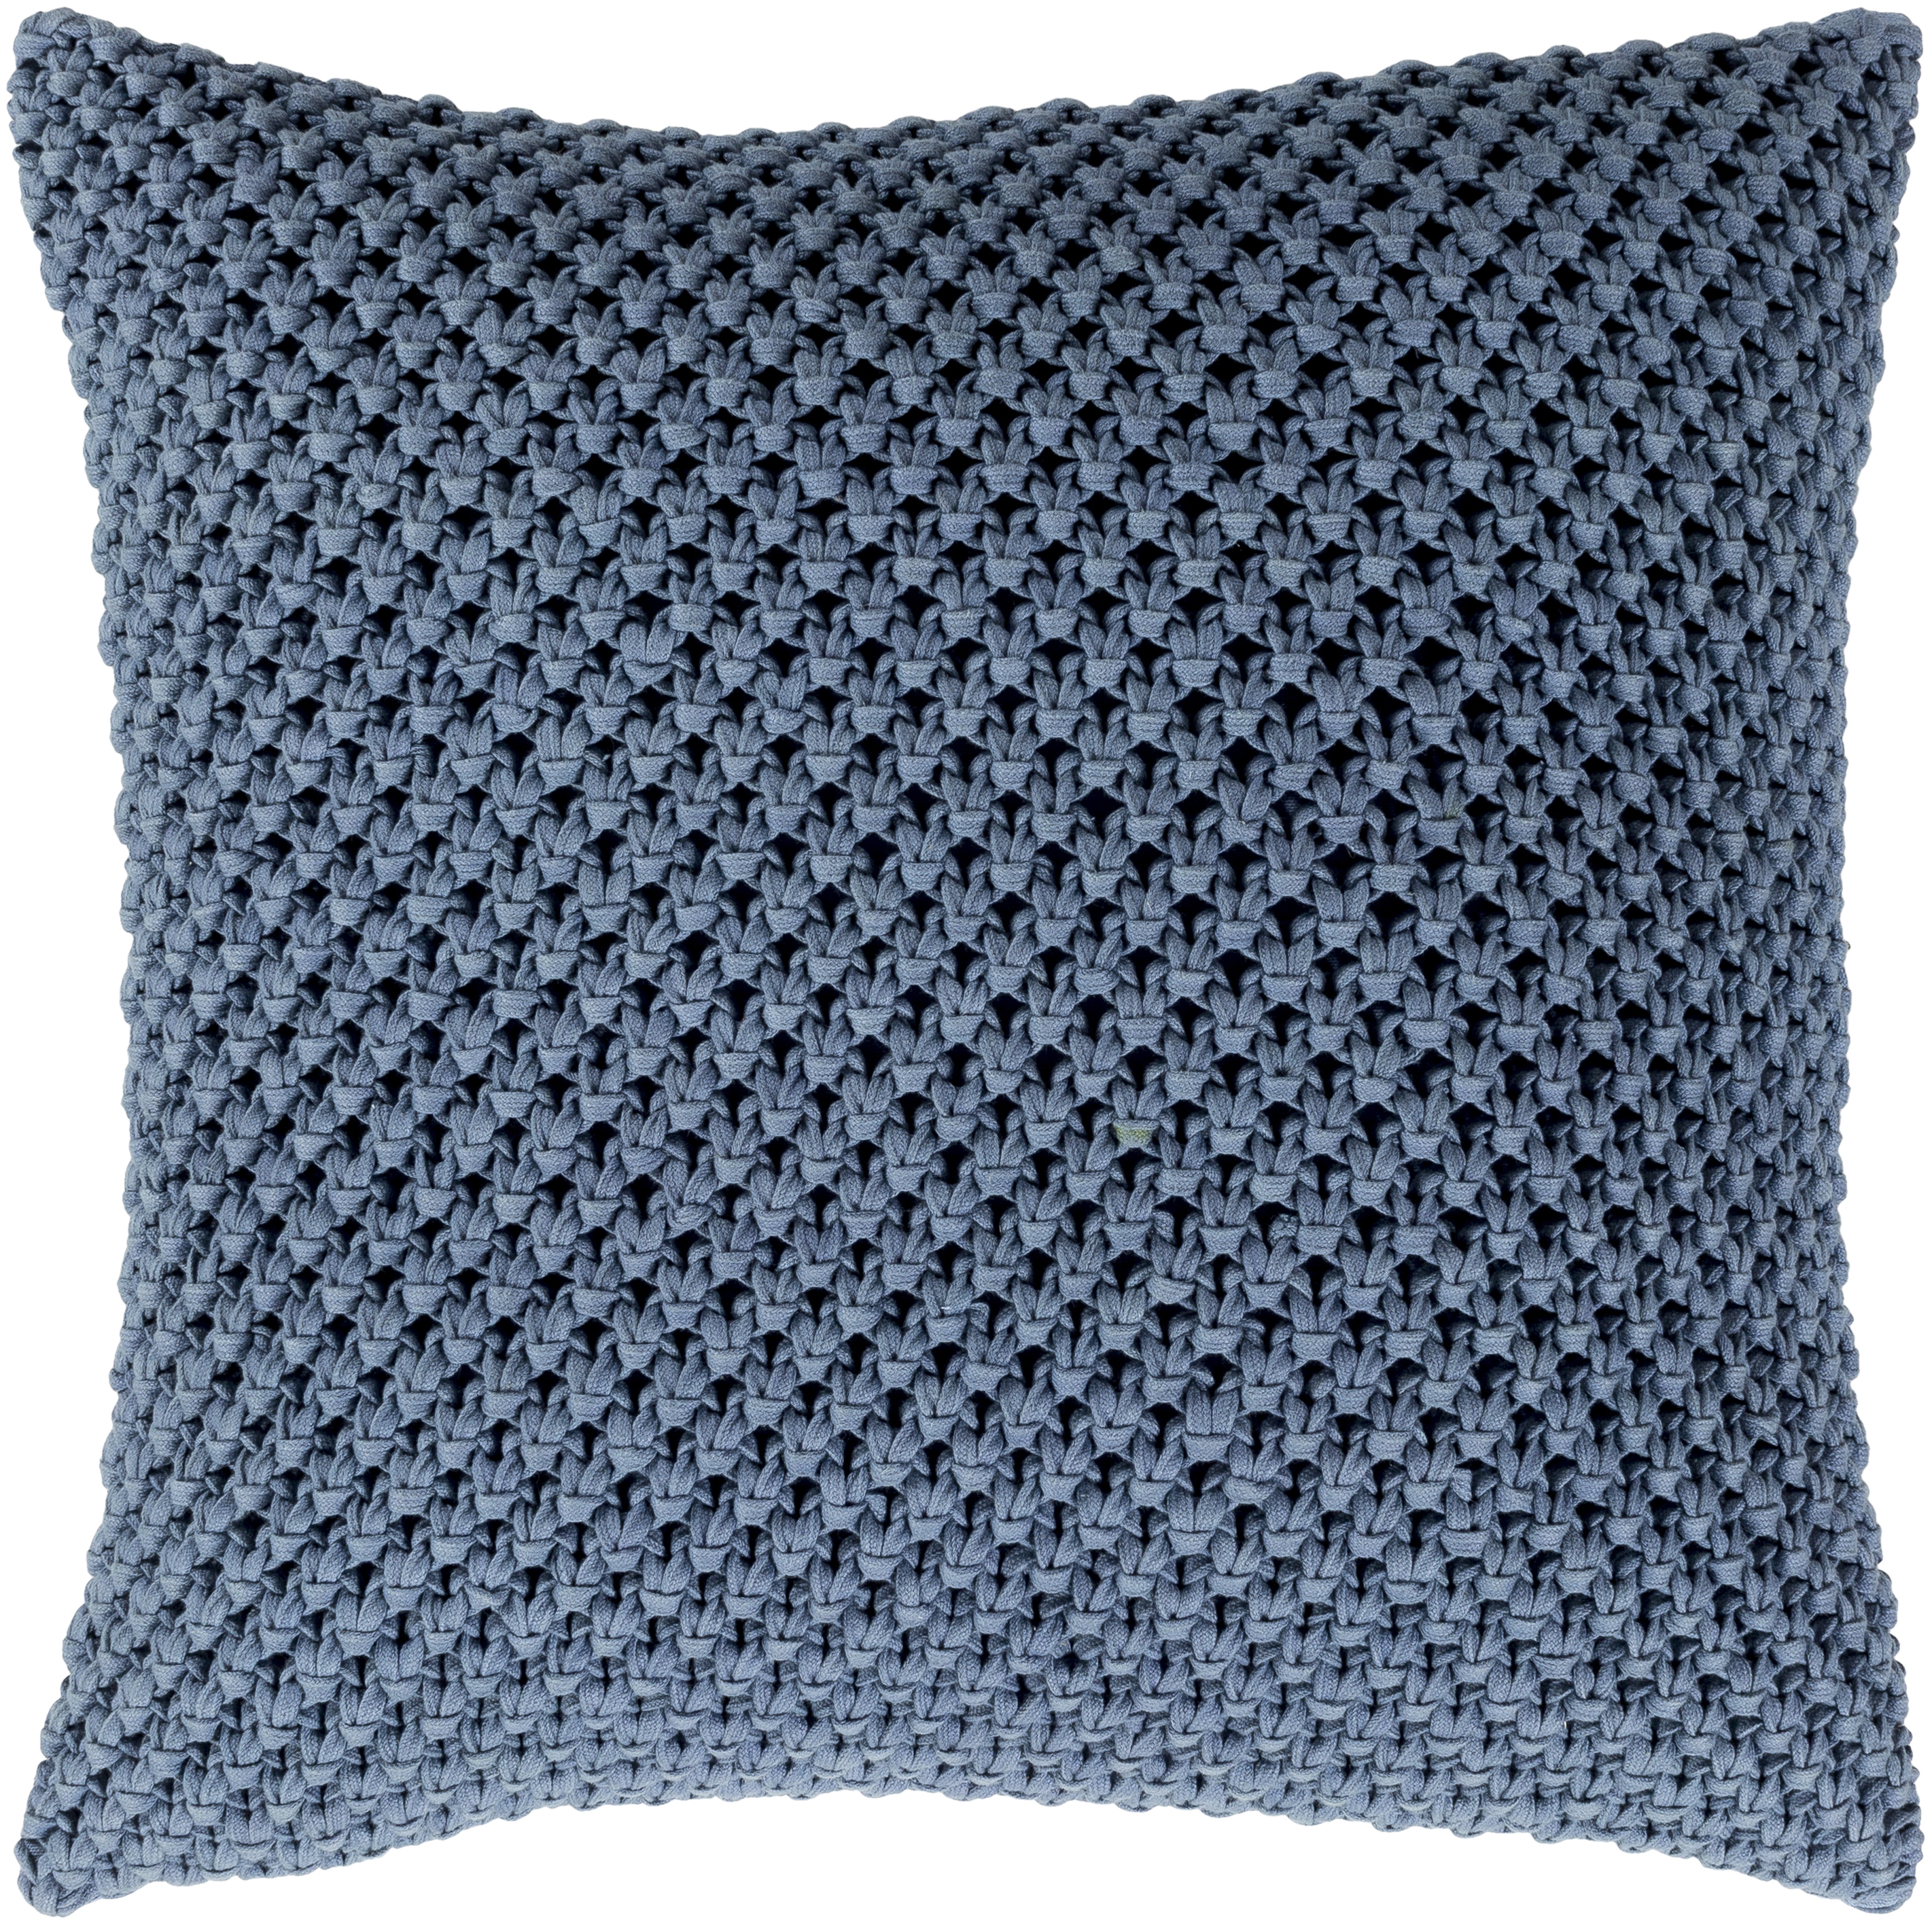 Godavari Throw Pillow, 18" x 18", with down insert - Image 0